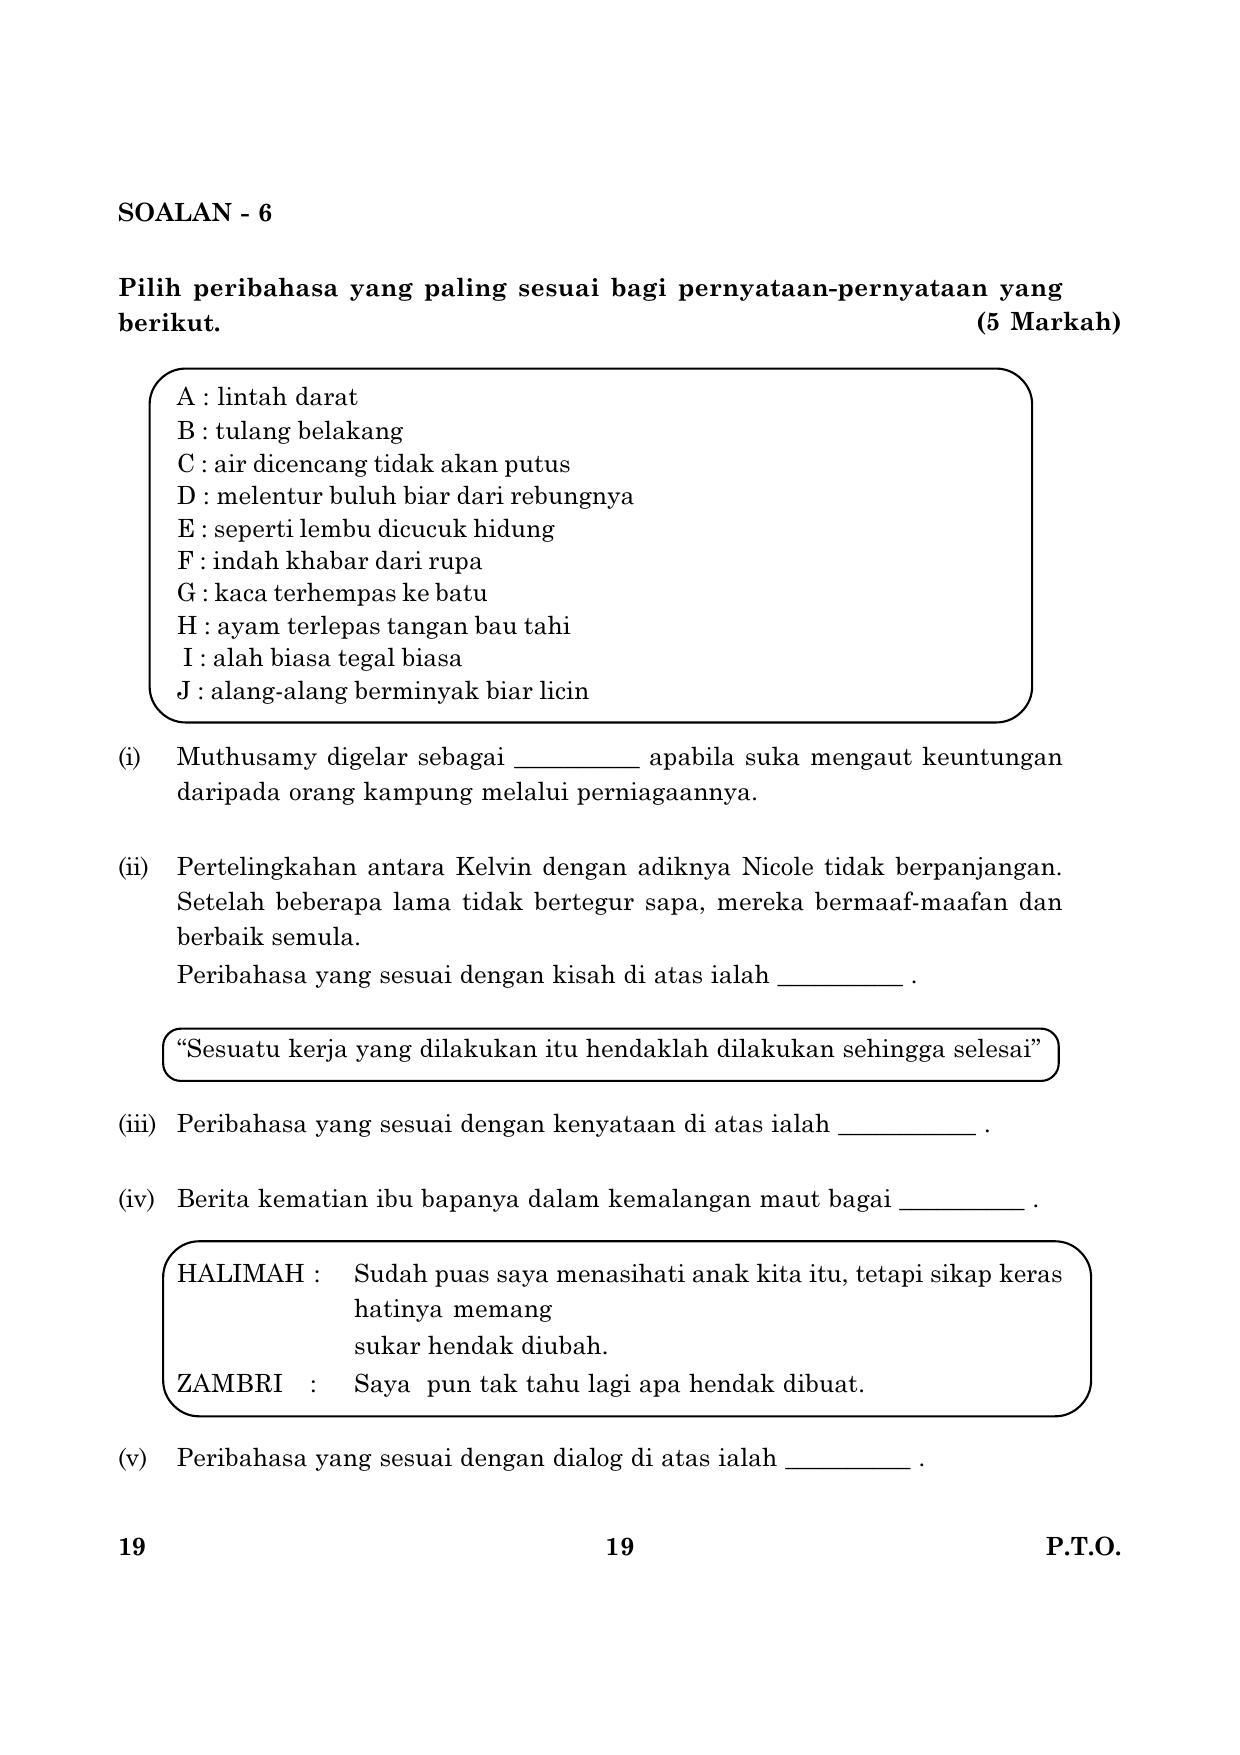 CBSE Class 10 019 Bahasamelayu English 2016 Question Paper - Page 19